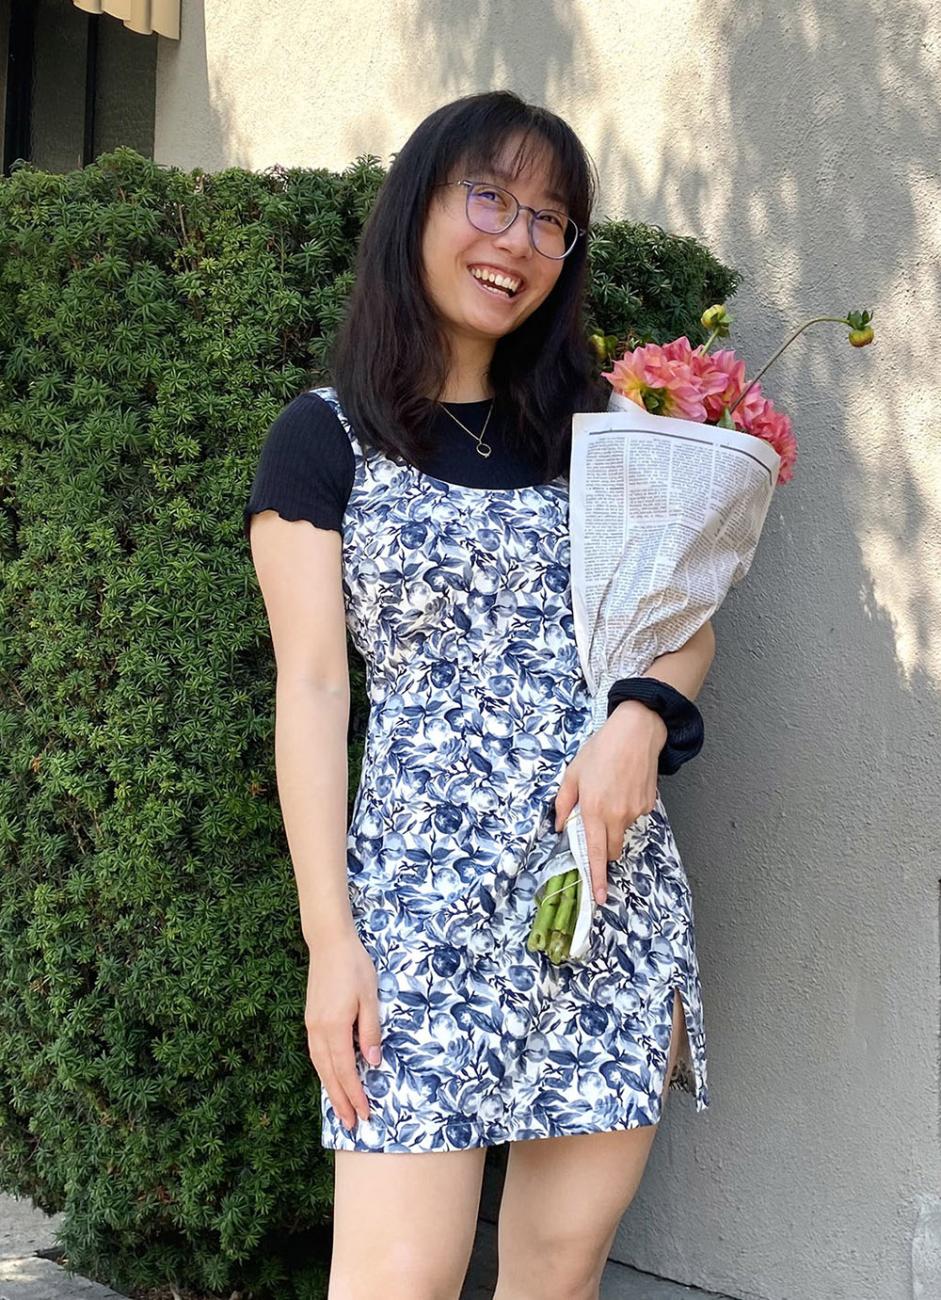 Kristine Chang ’21